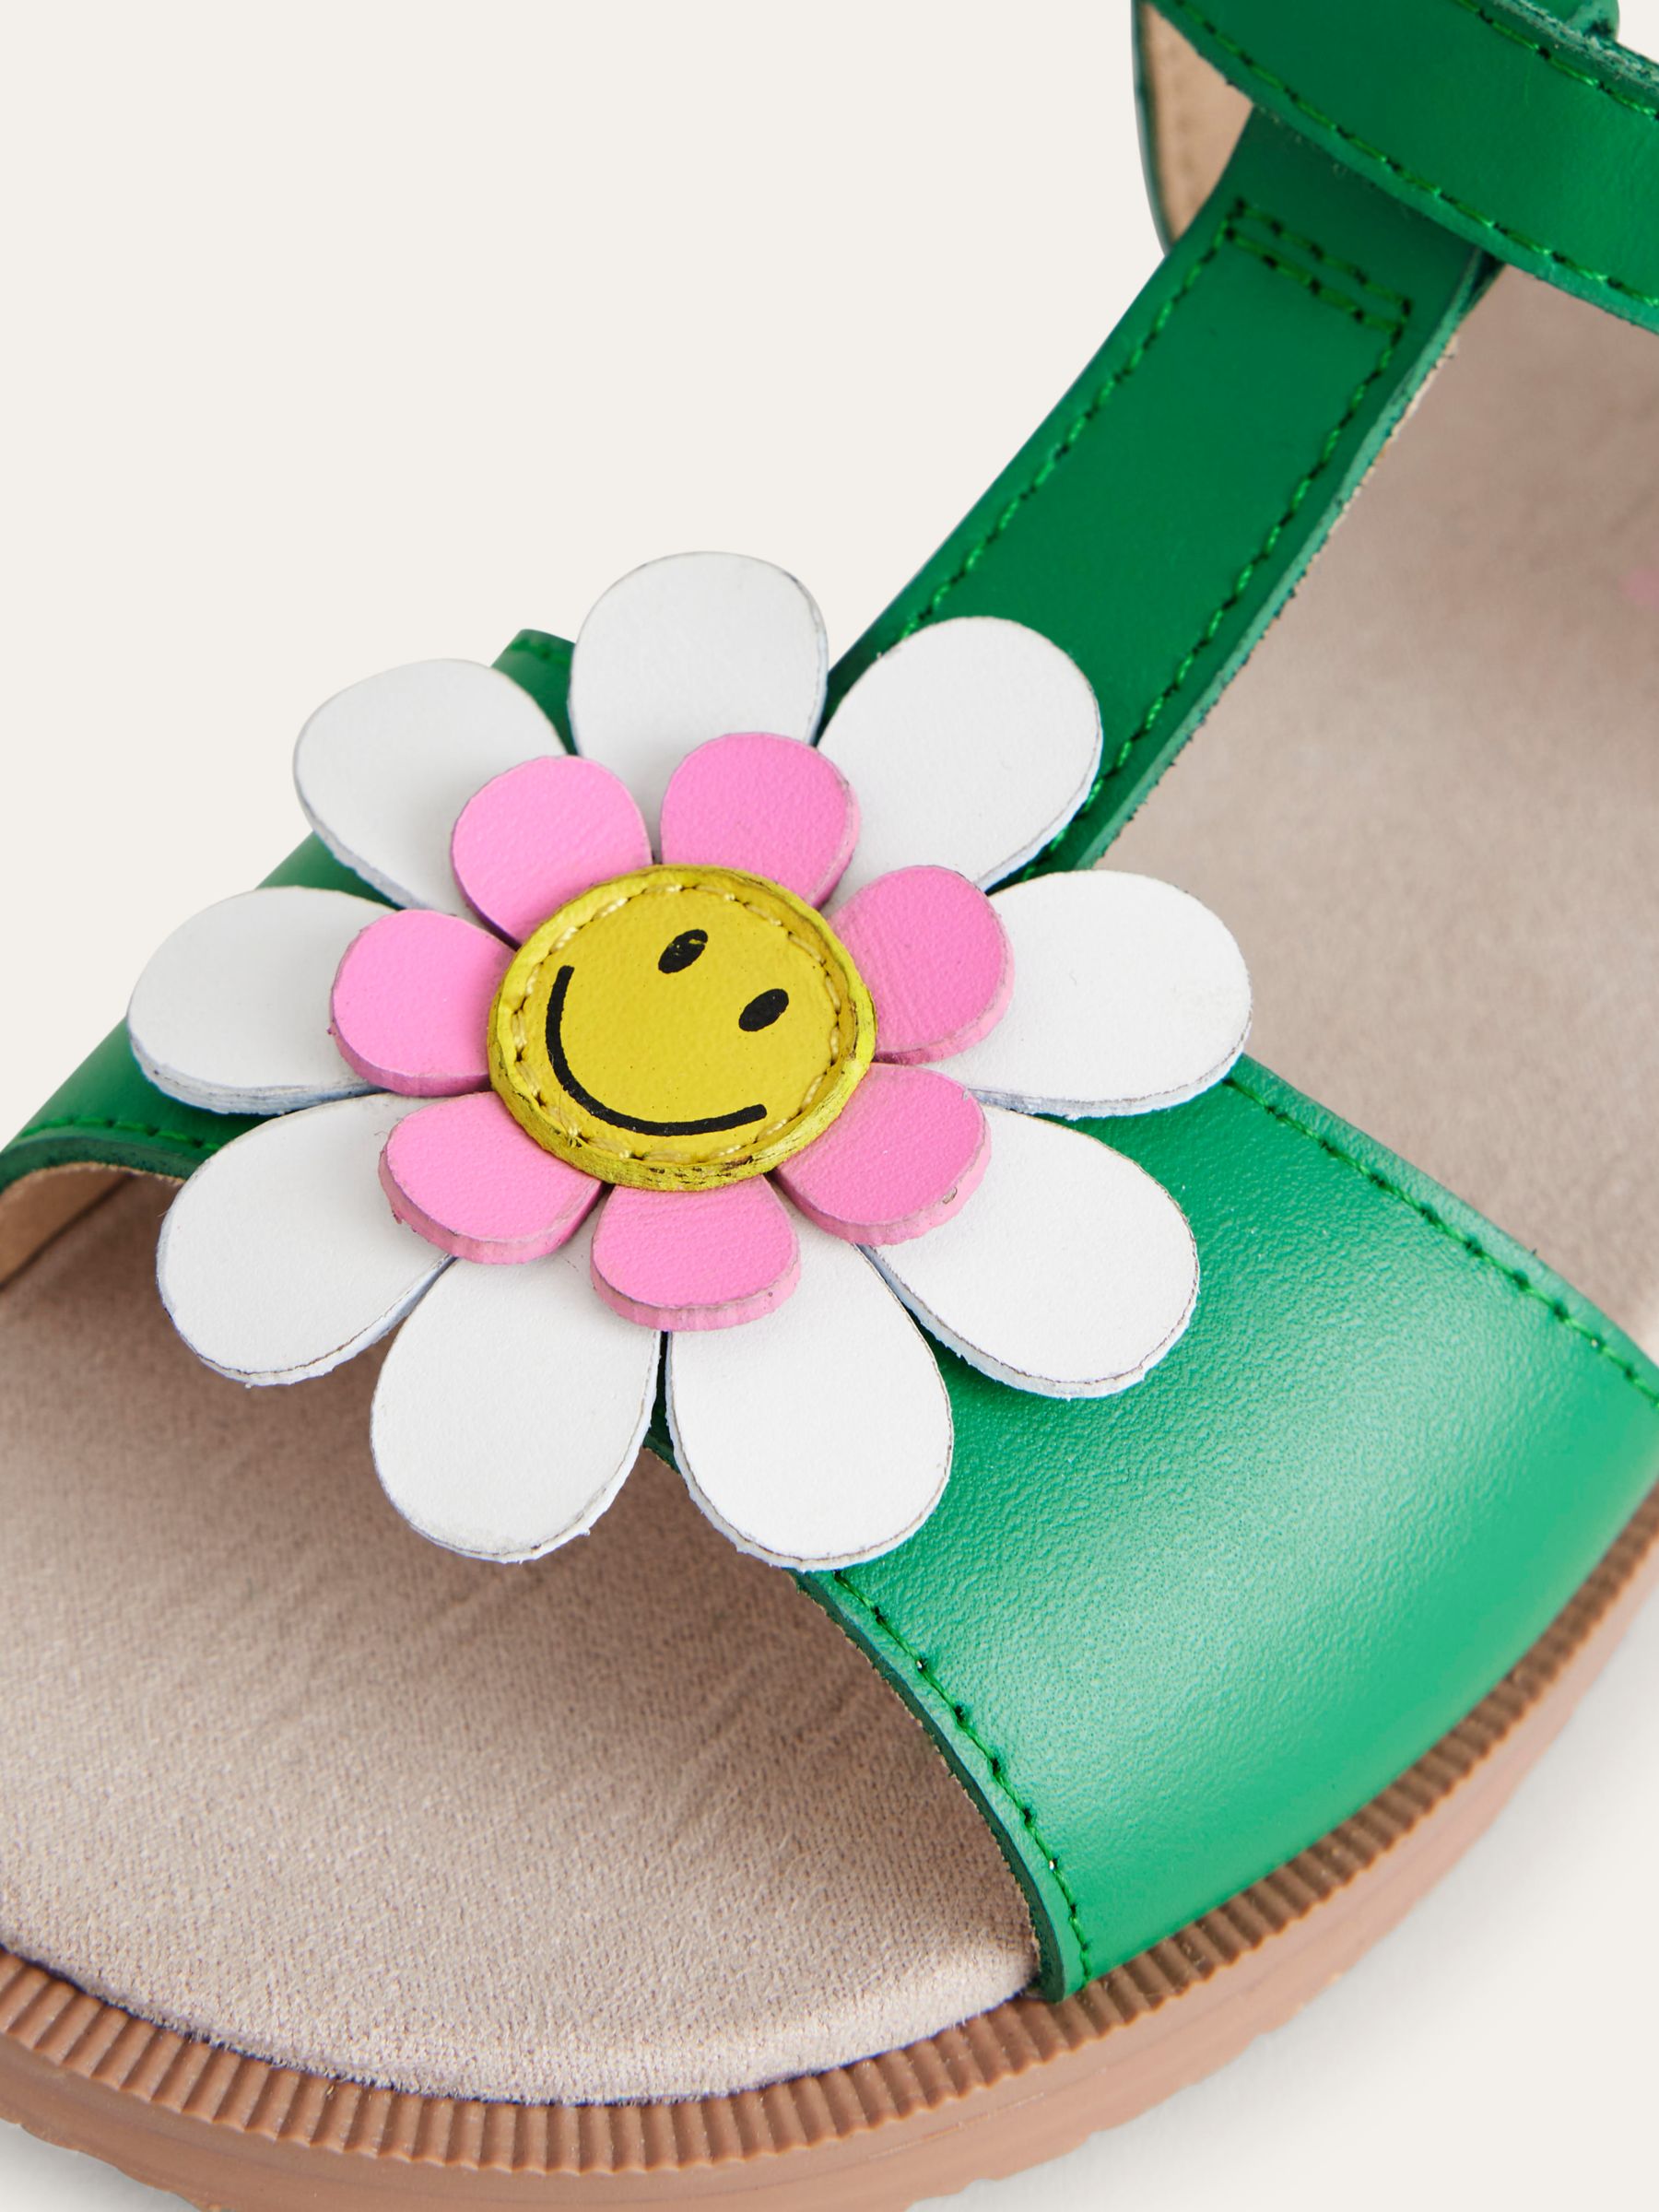 Mini Boden Kids' Leather Fun Flower Sandals, Green Smiley, 7 Jnr